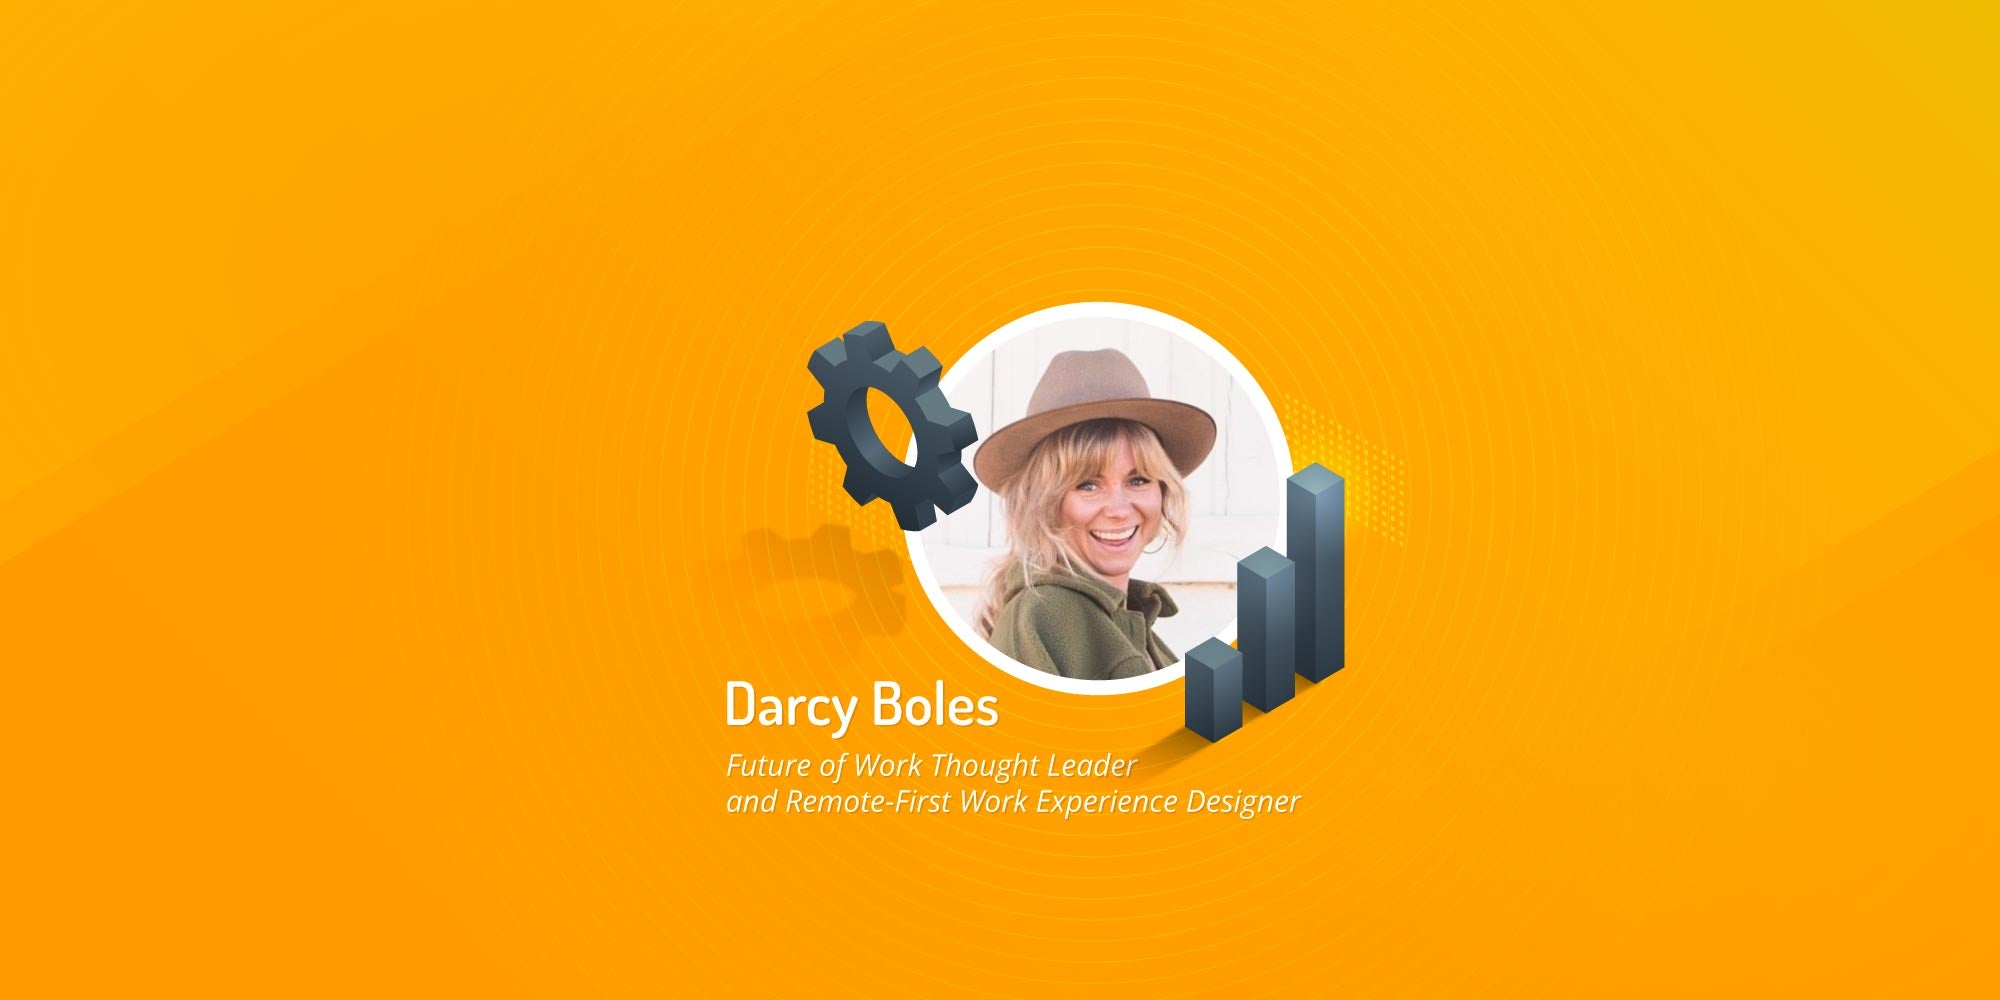 darcy boyles in a roundel on orange background